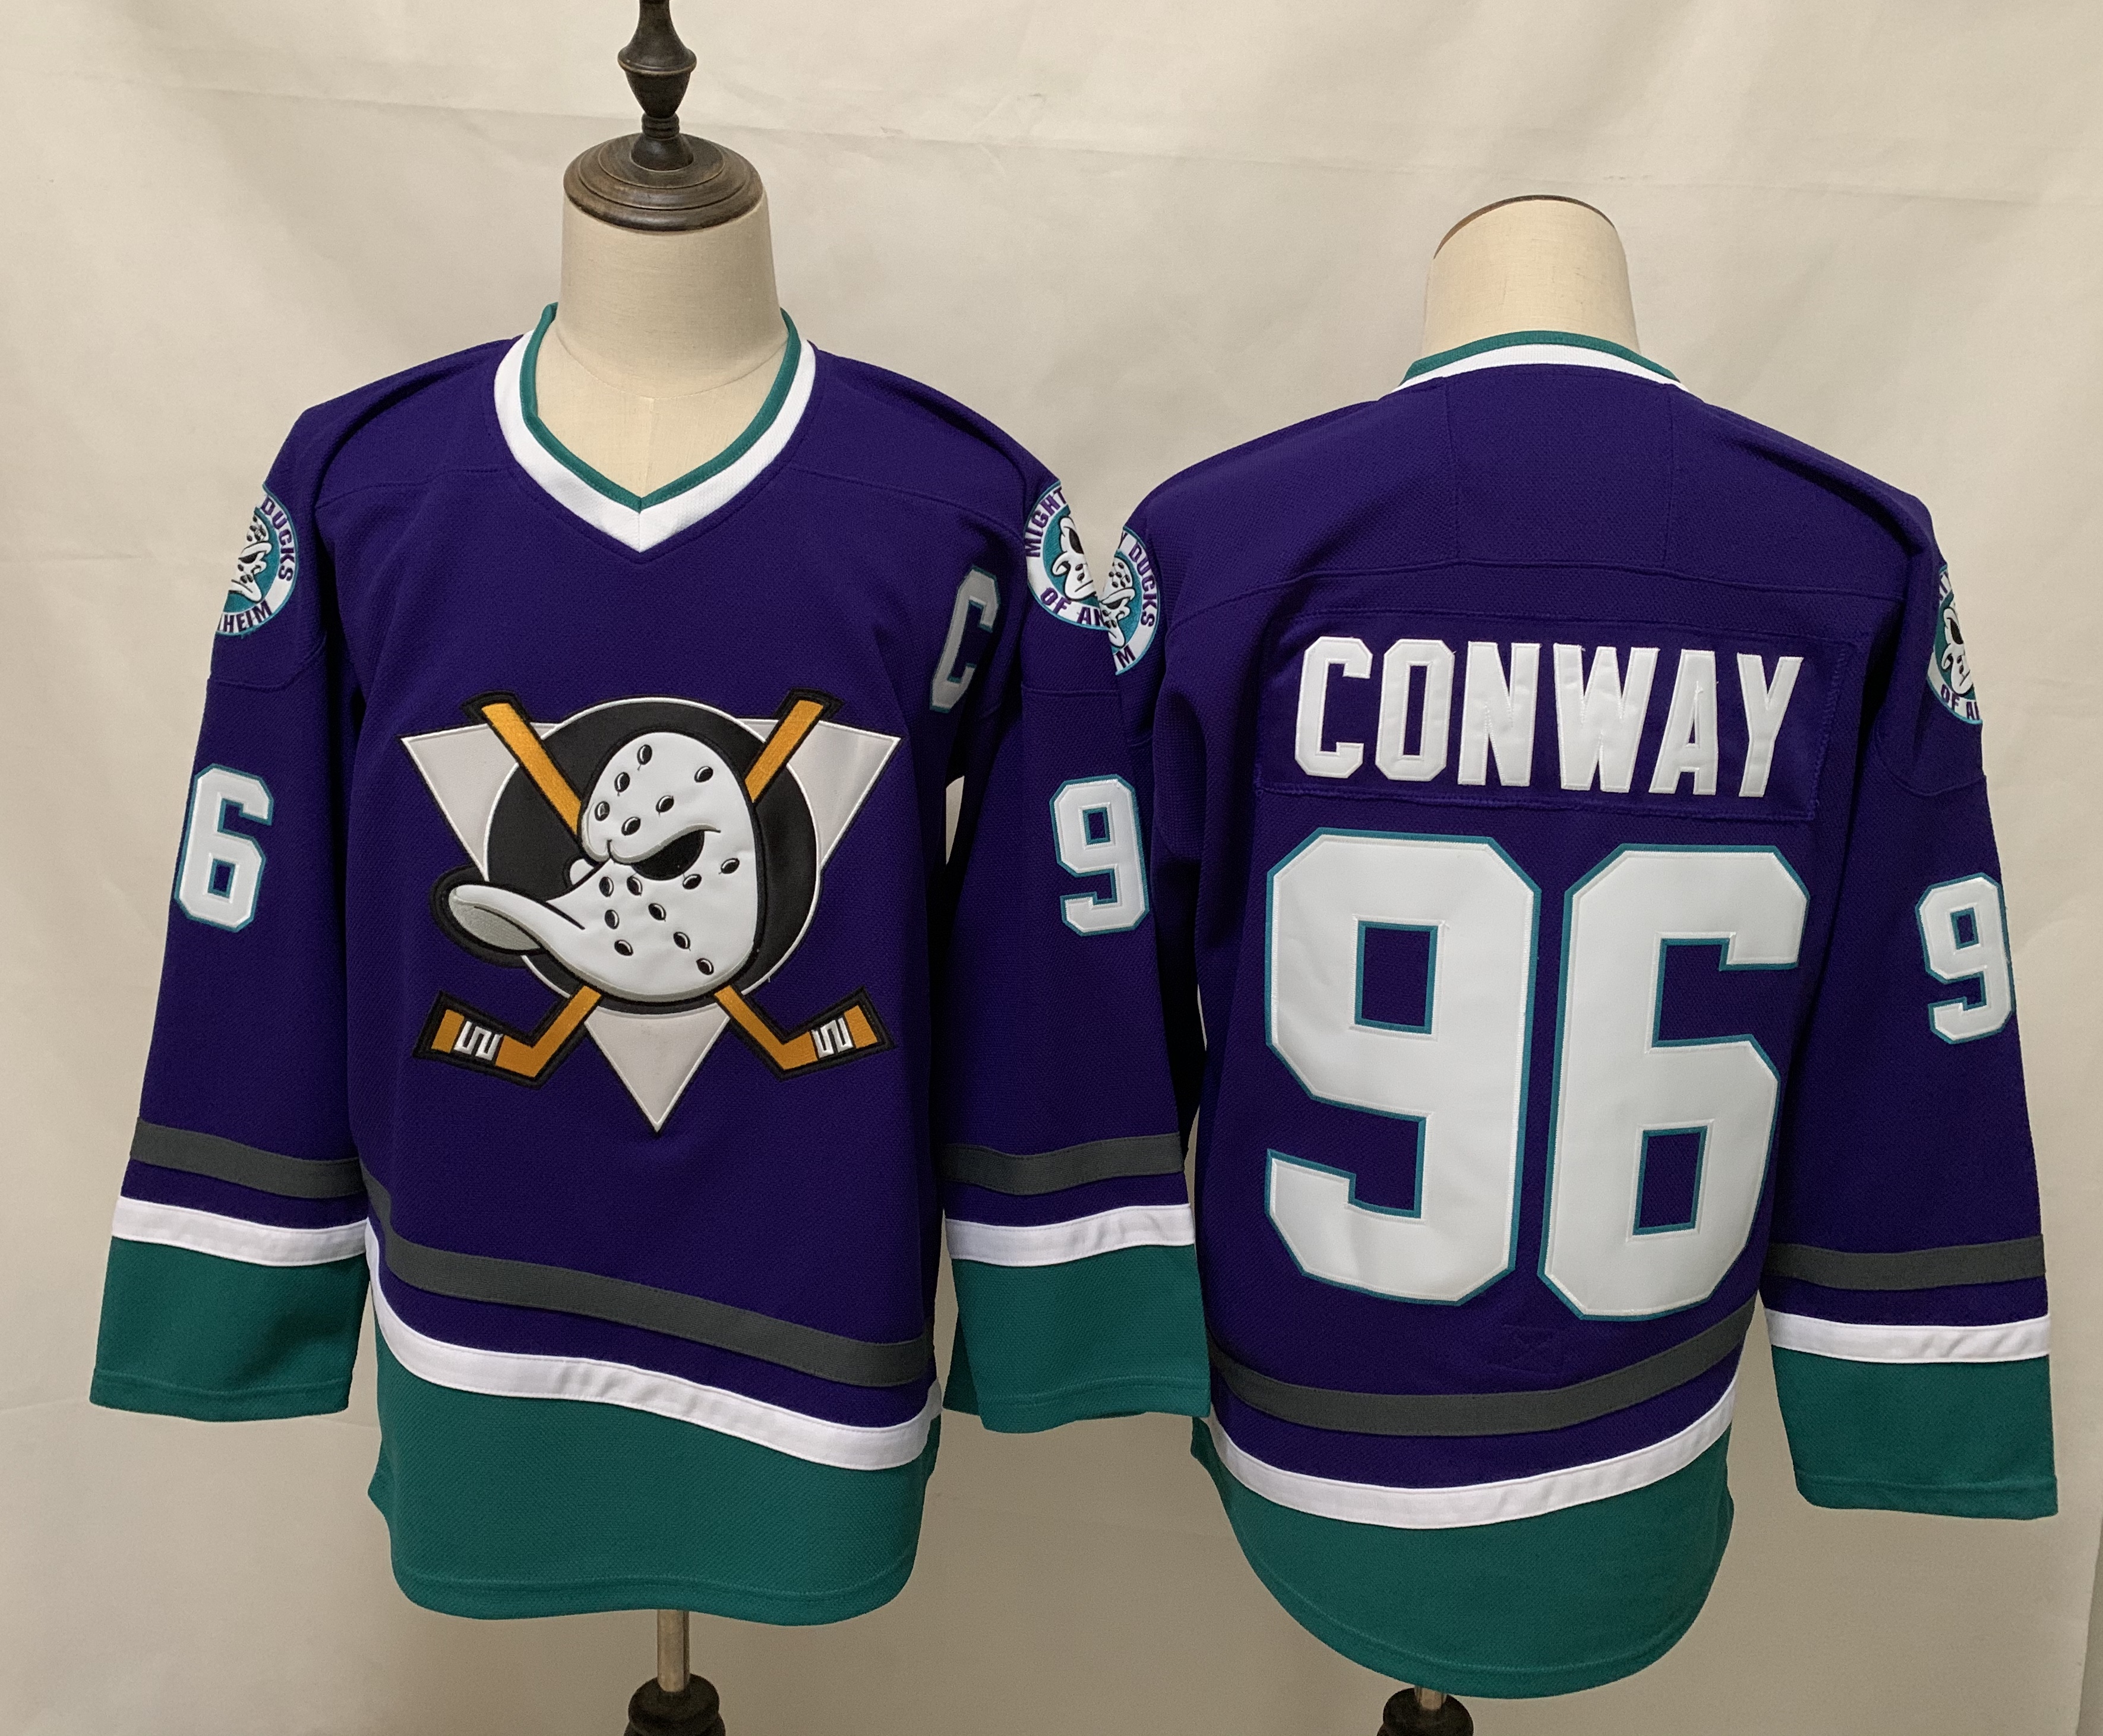 Ducks 96 Charlie Conway Purple 2020-21 Reverse Retro Adidas Jersey